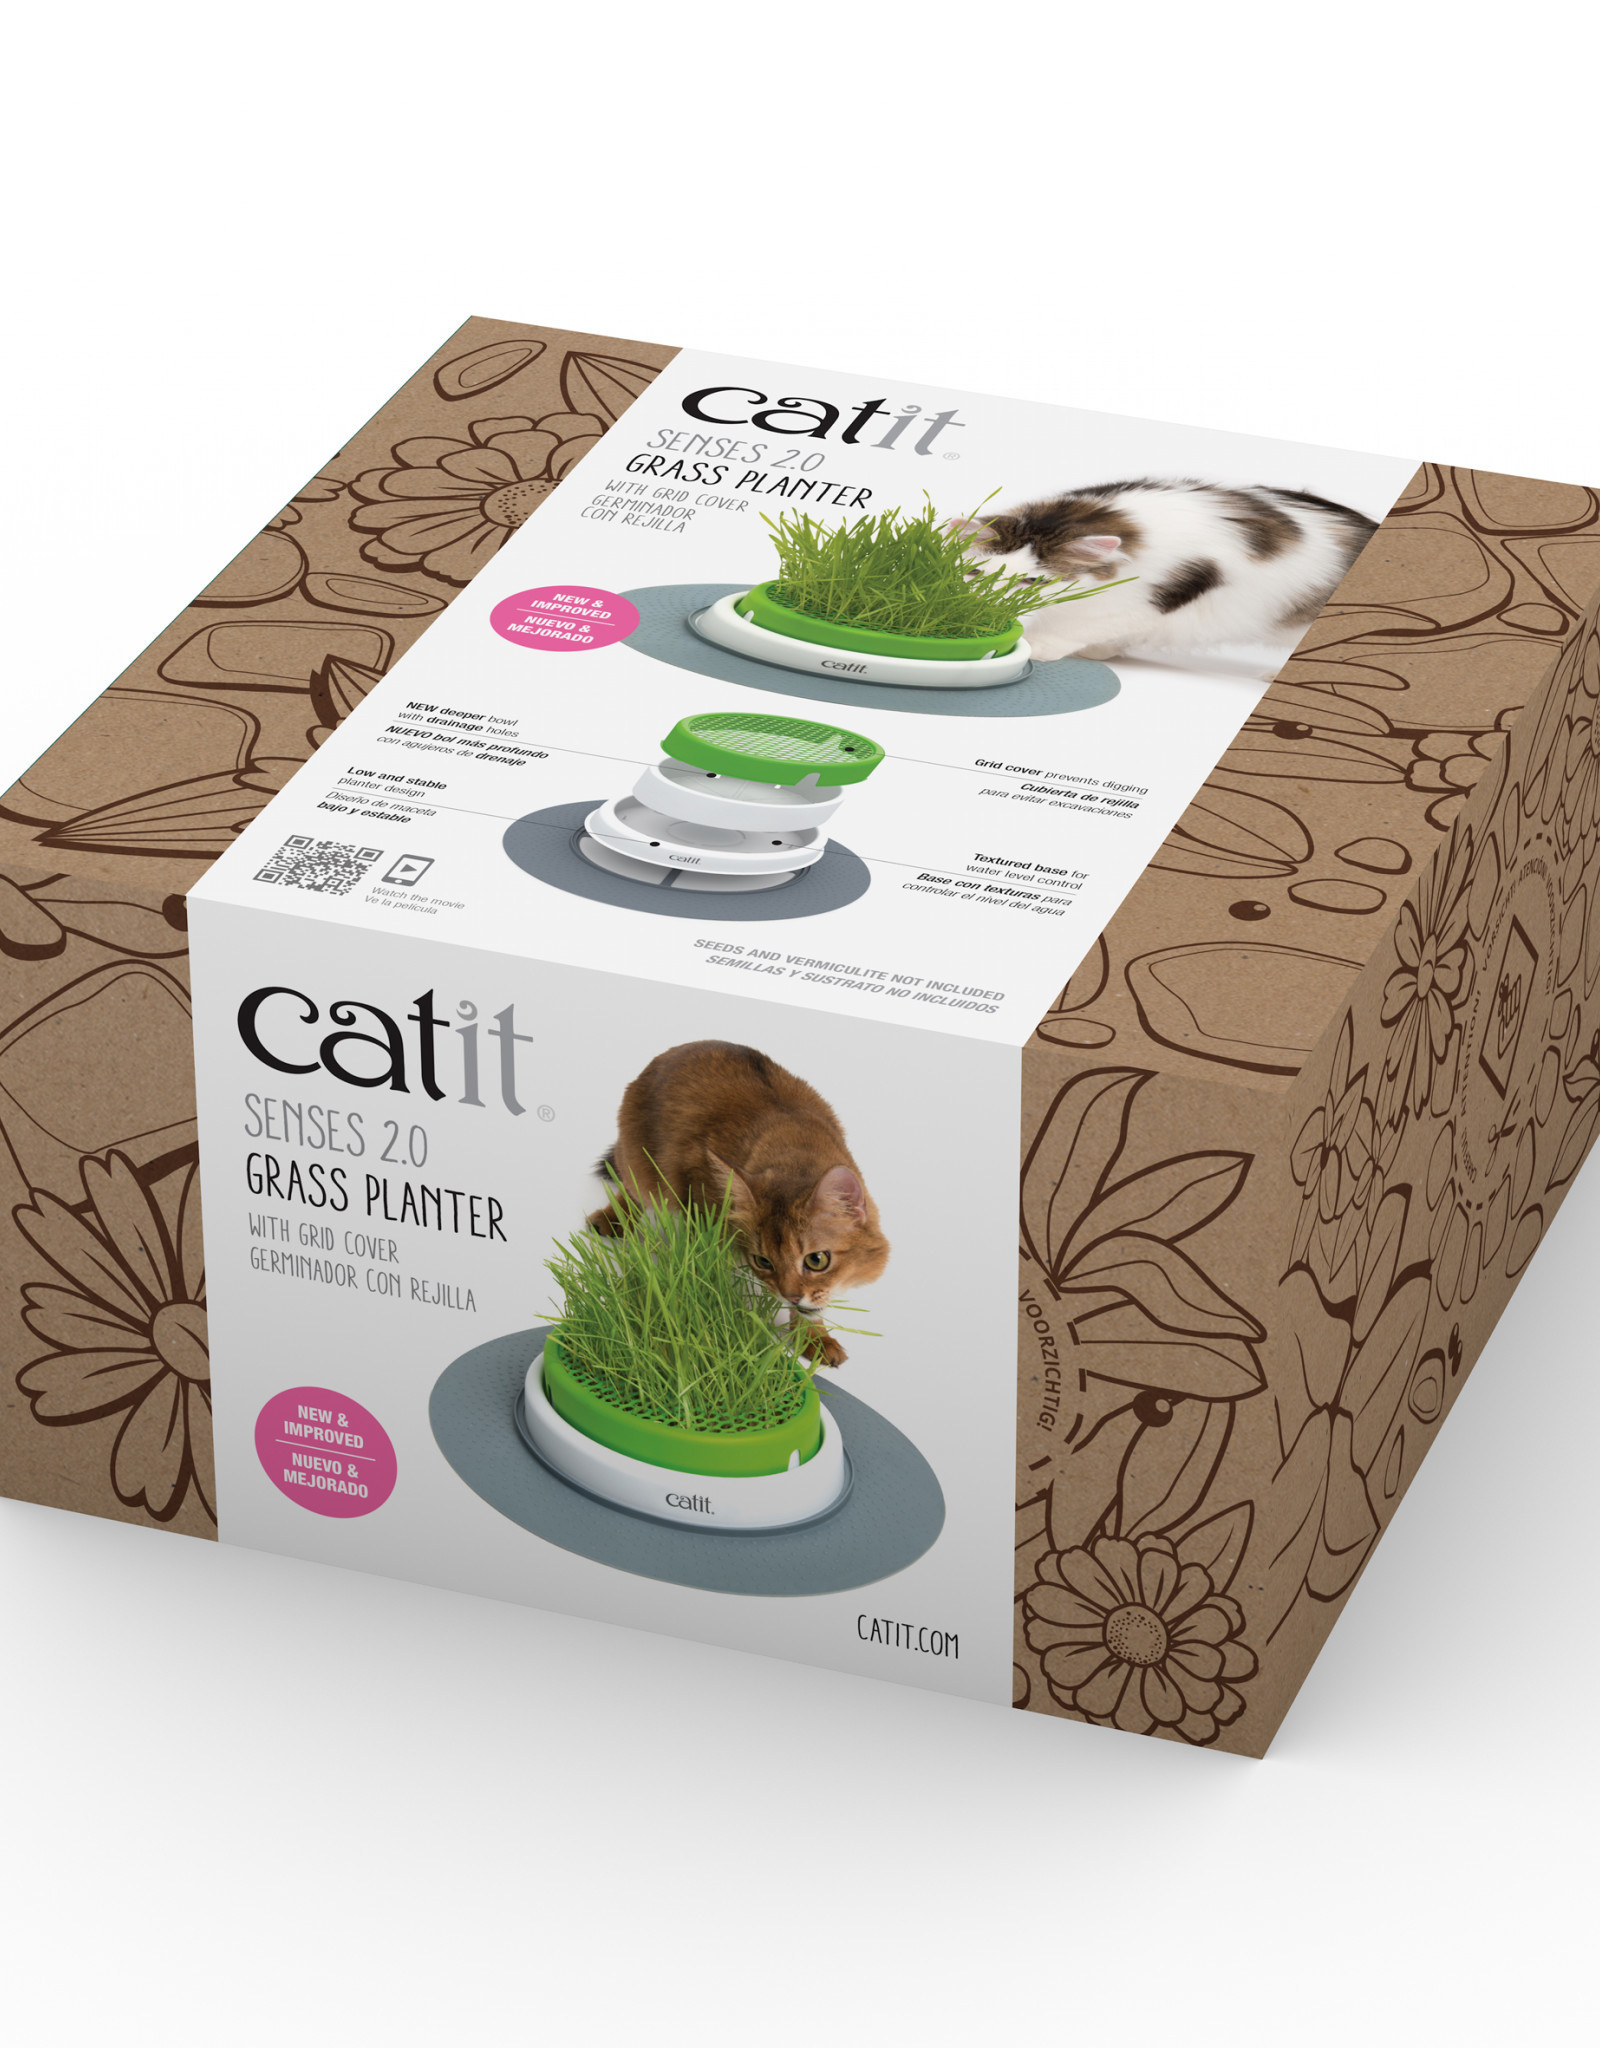 Hagen Catit Senses 2.0 grass planter